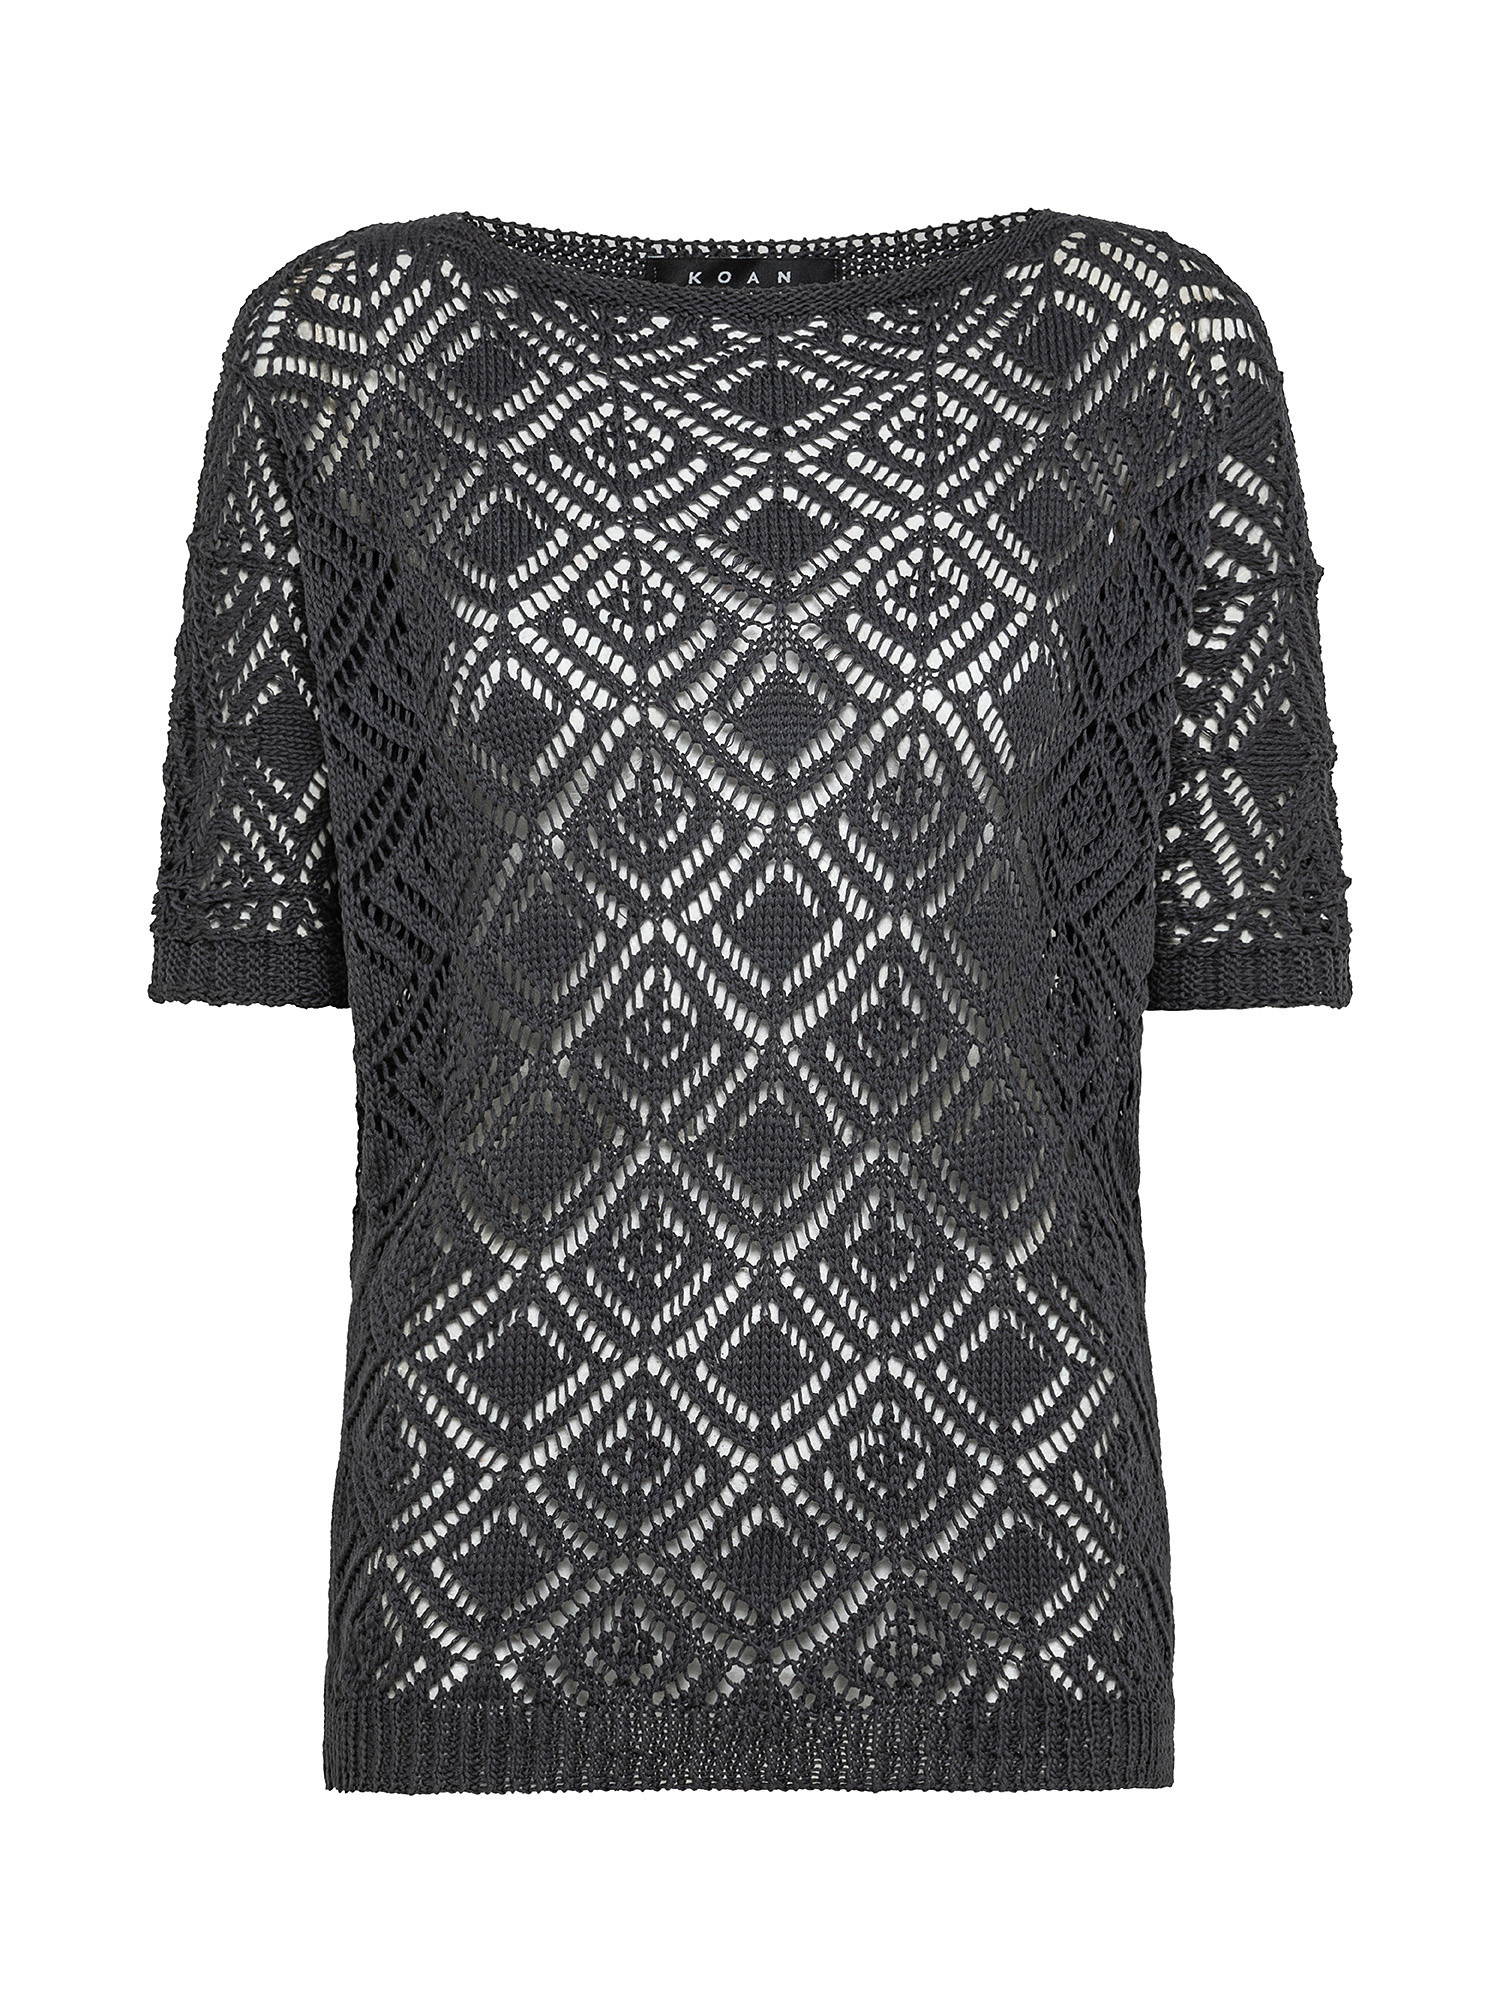 Patterned stitch kimono sweater, Black, large image number 0